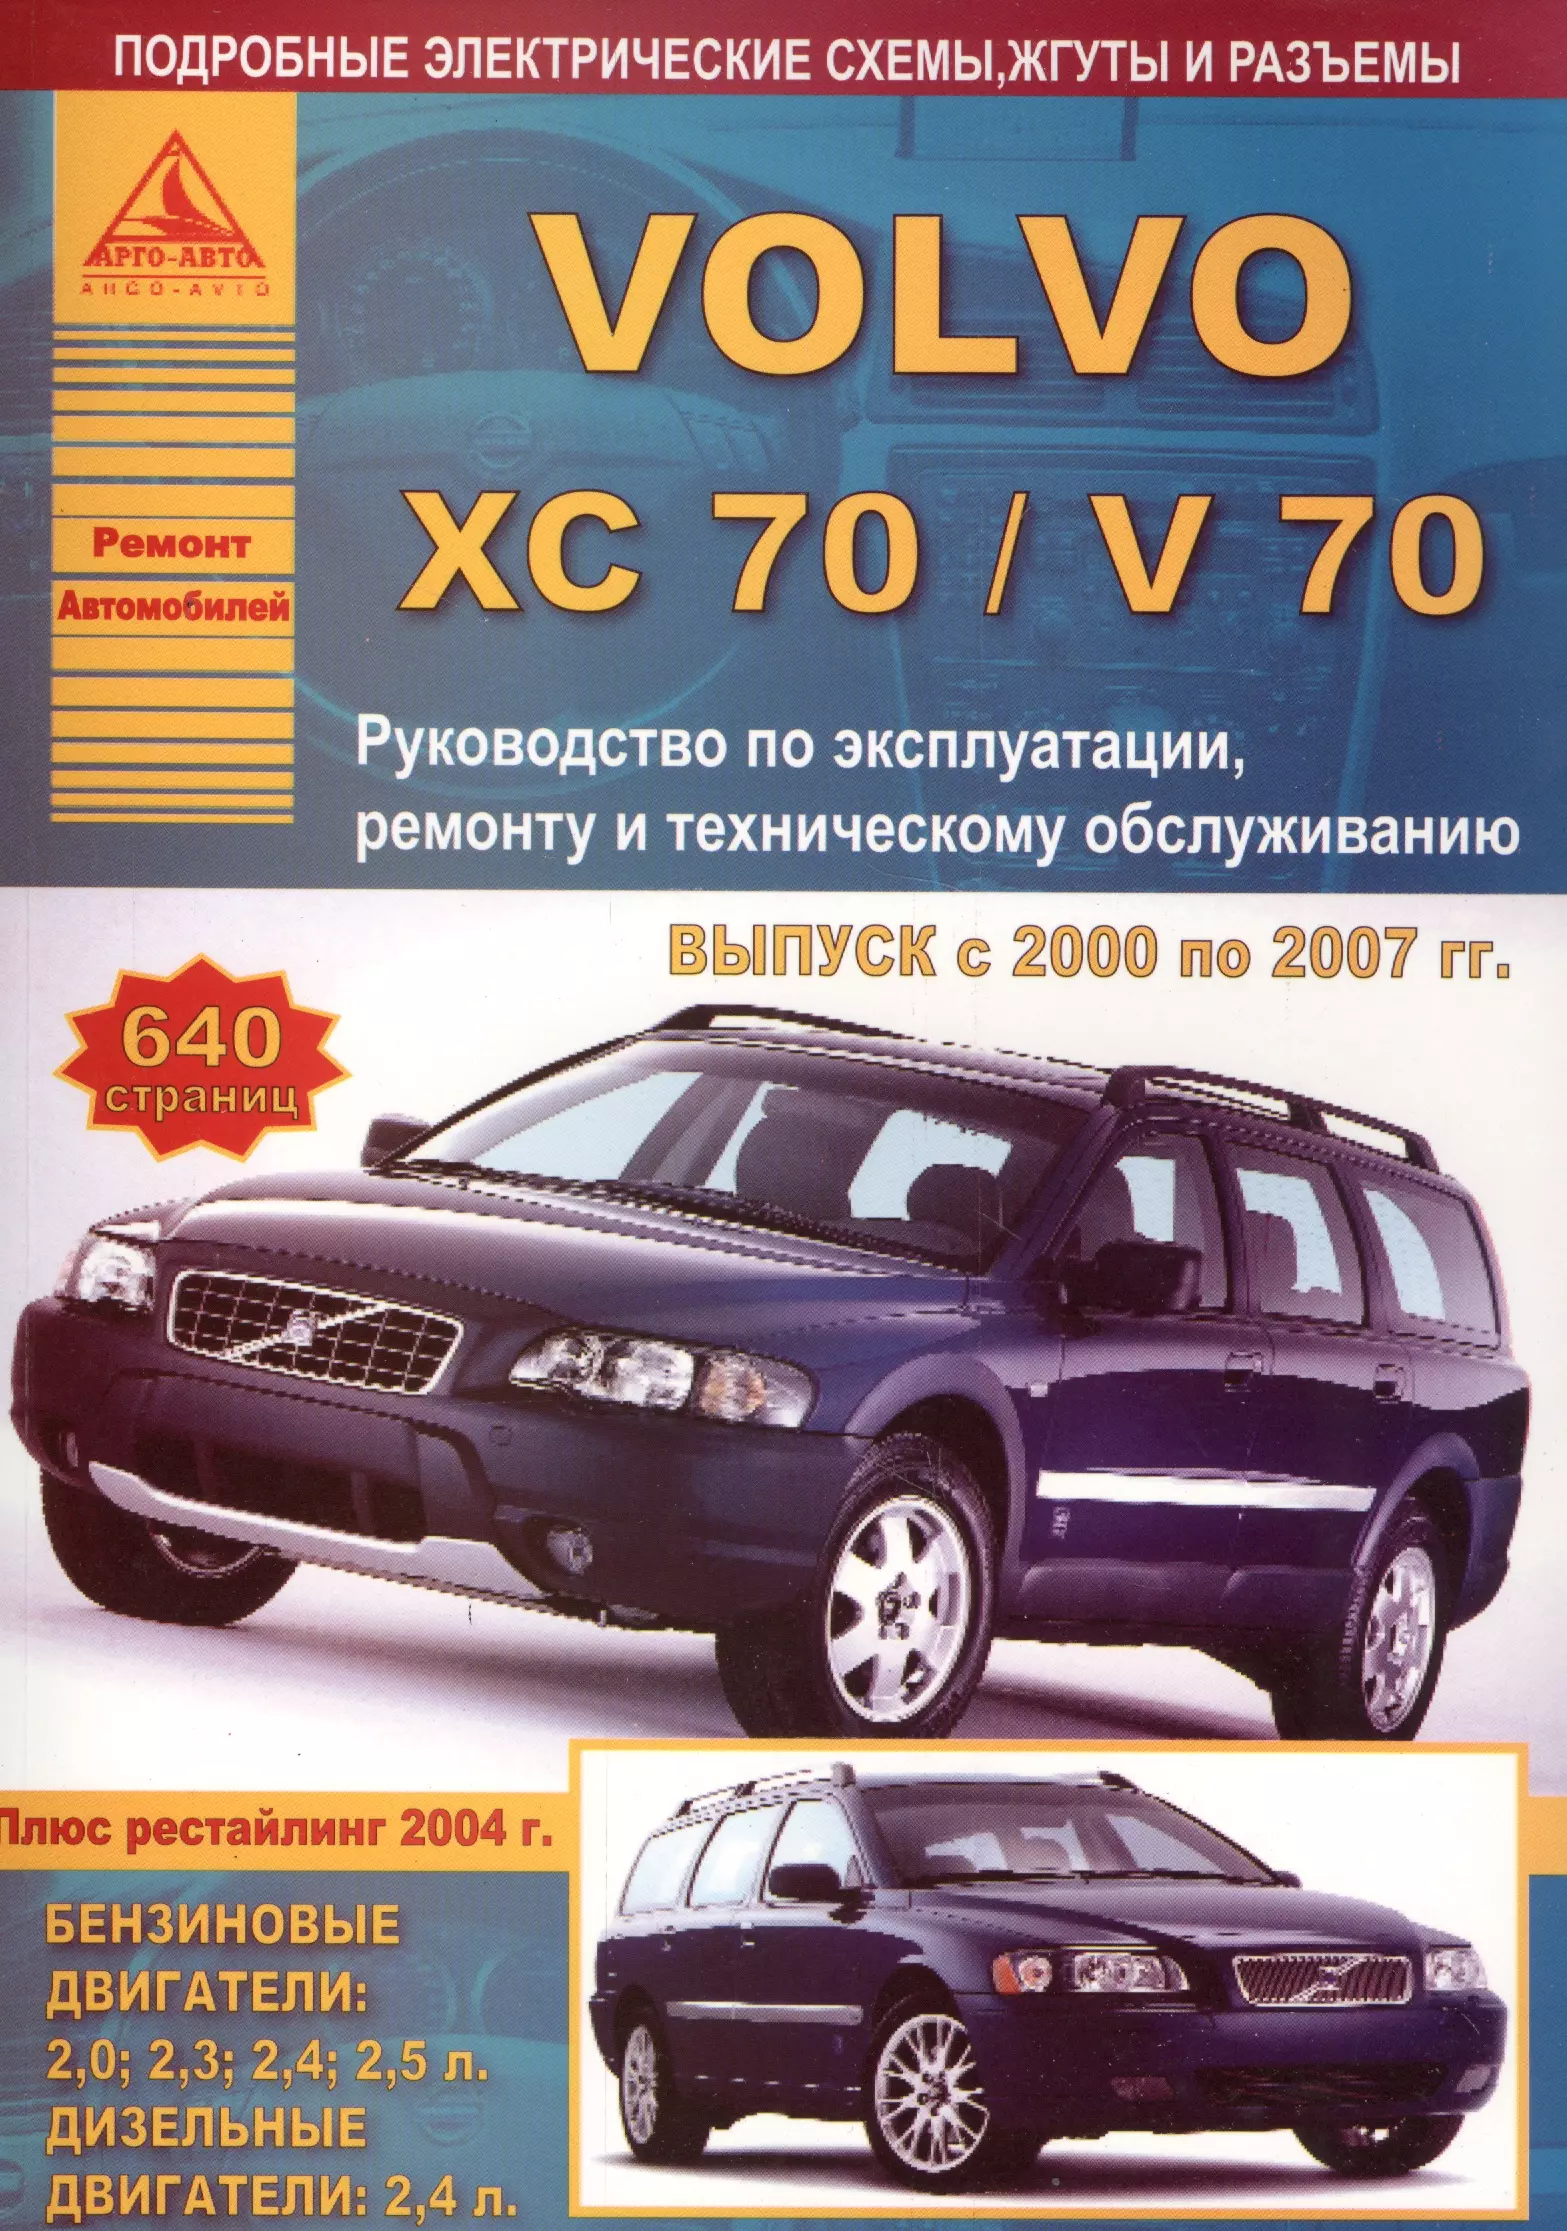  - Volvo XC 70 /V 70 с 2000 г. Экспл. устр. обсл. ремонт